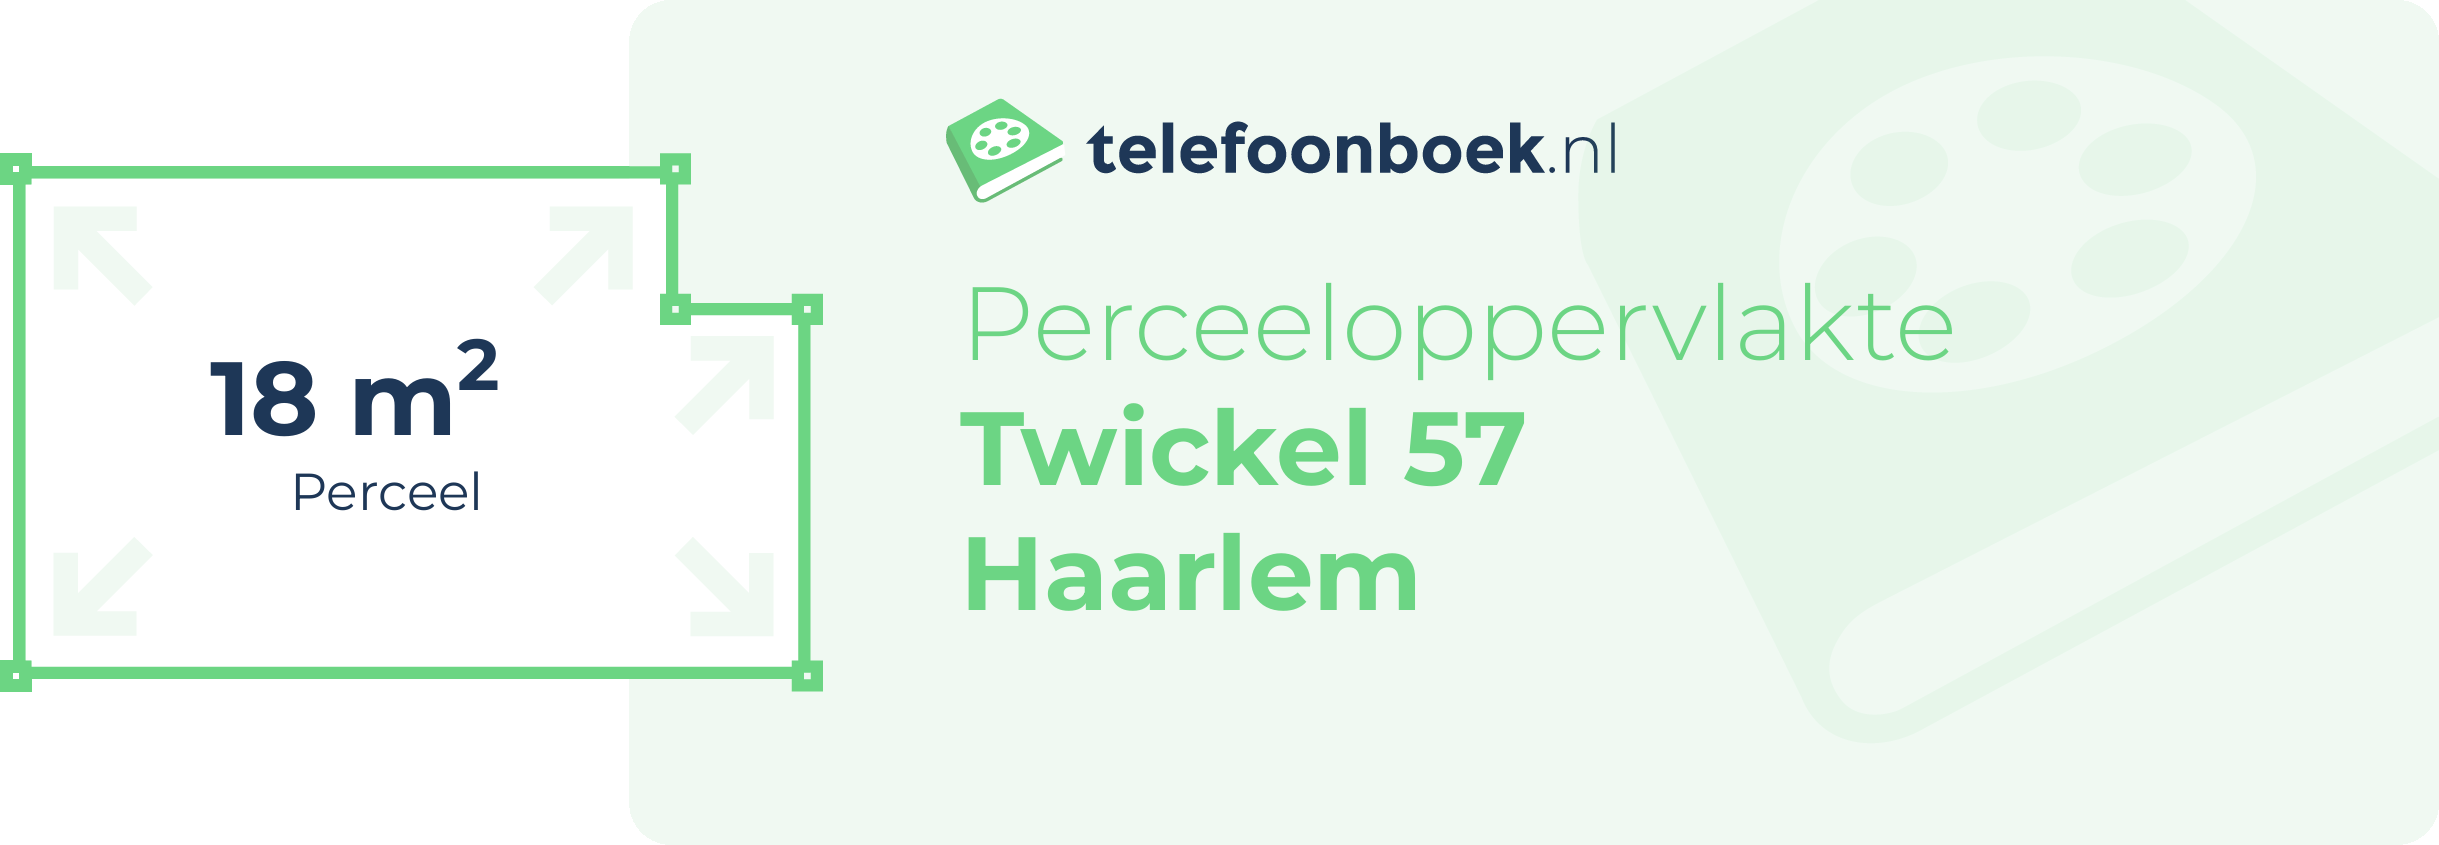 Perceeloppervlakte Twickel 57 Haarlem